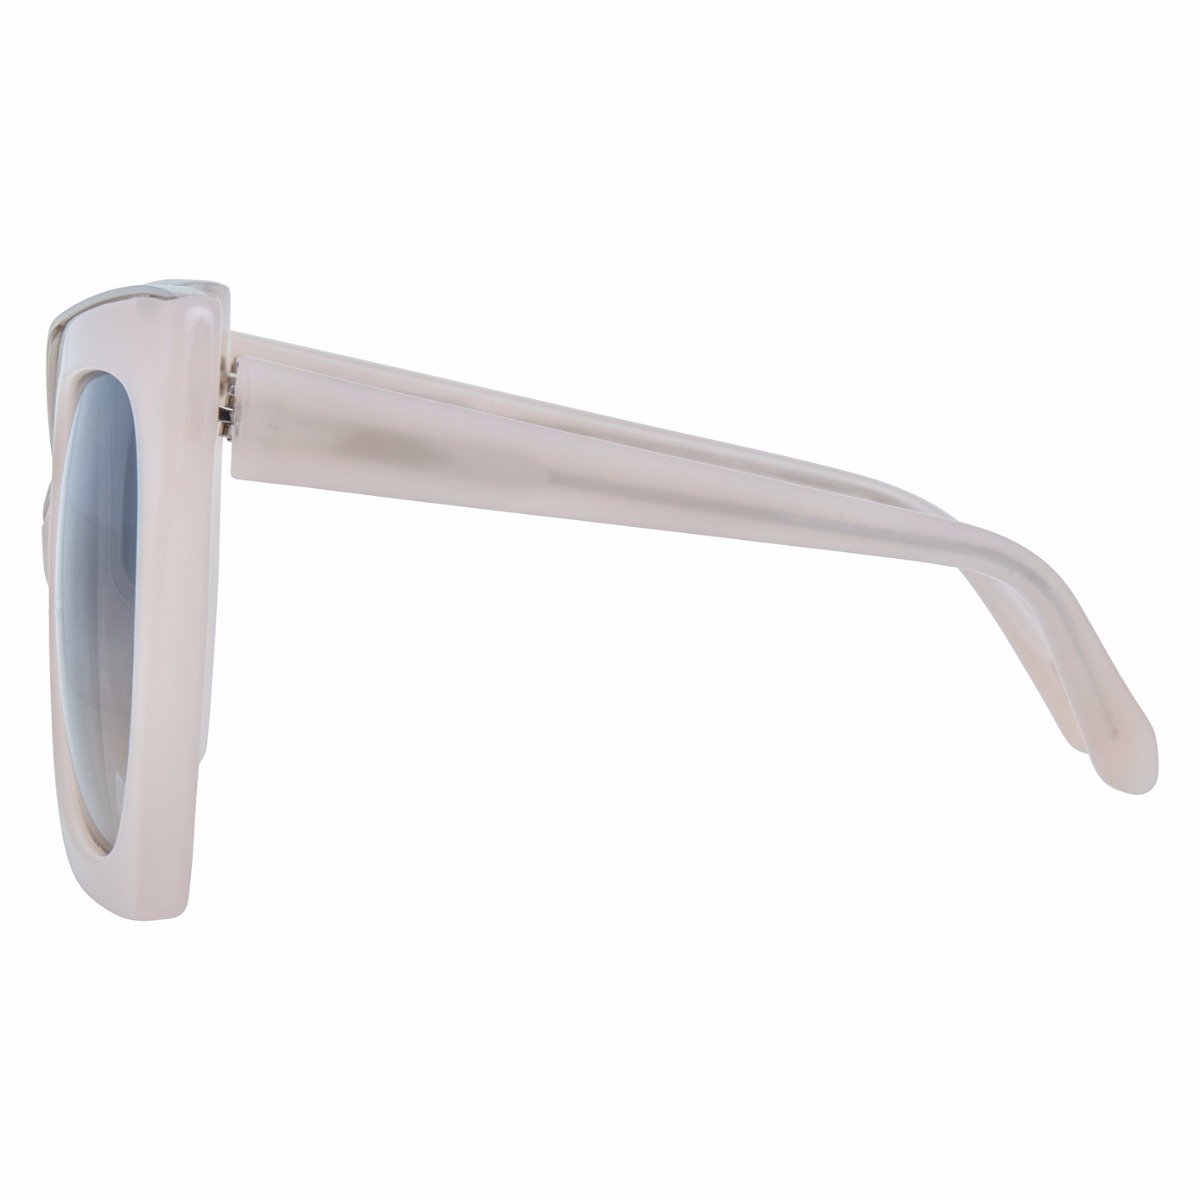 Color_N21S2C3SUN - N°21 S2 C3 Oversized Sunglasses